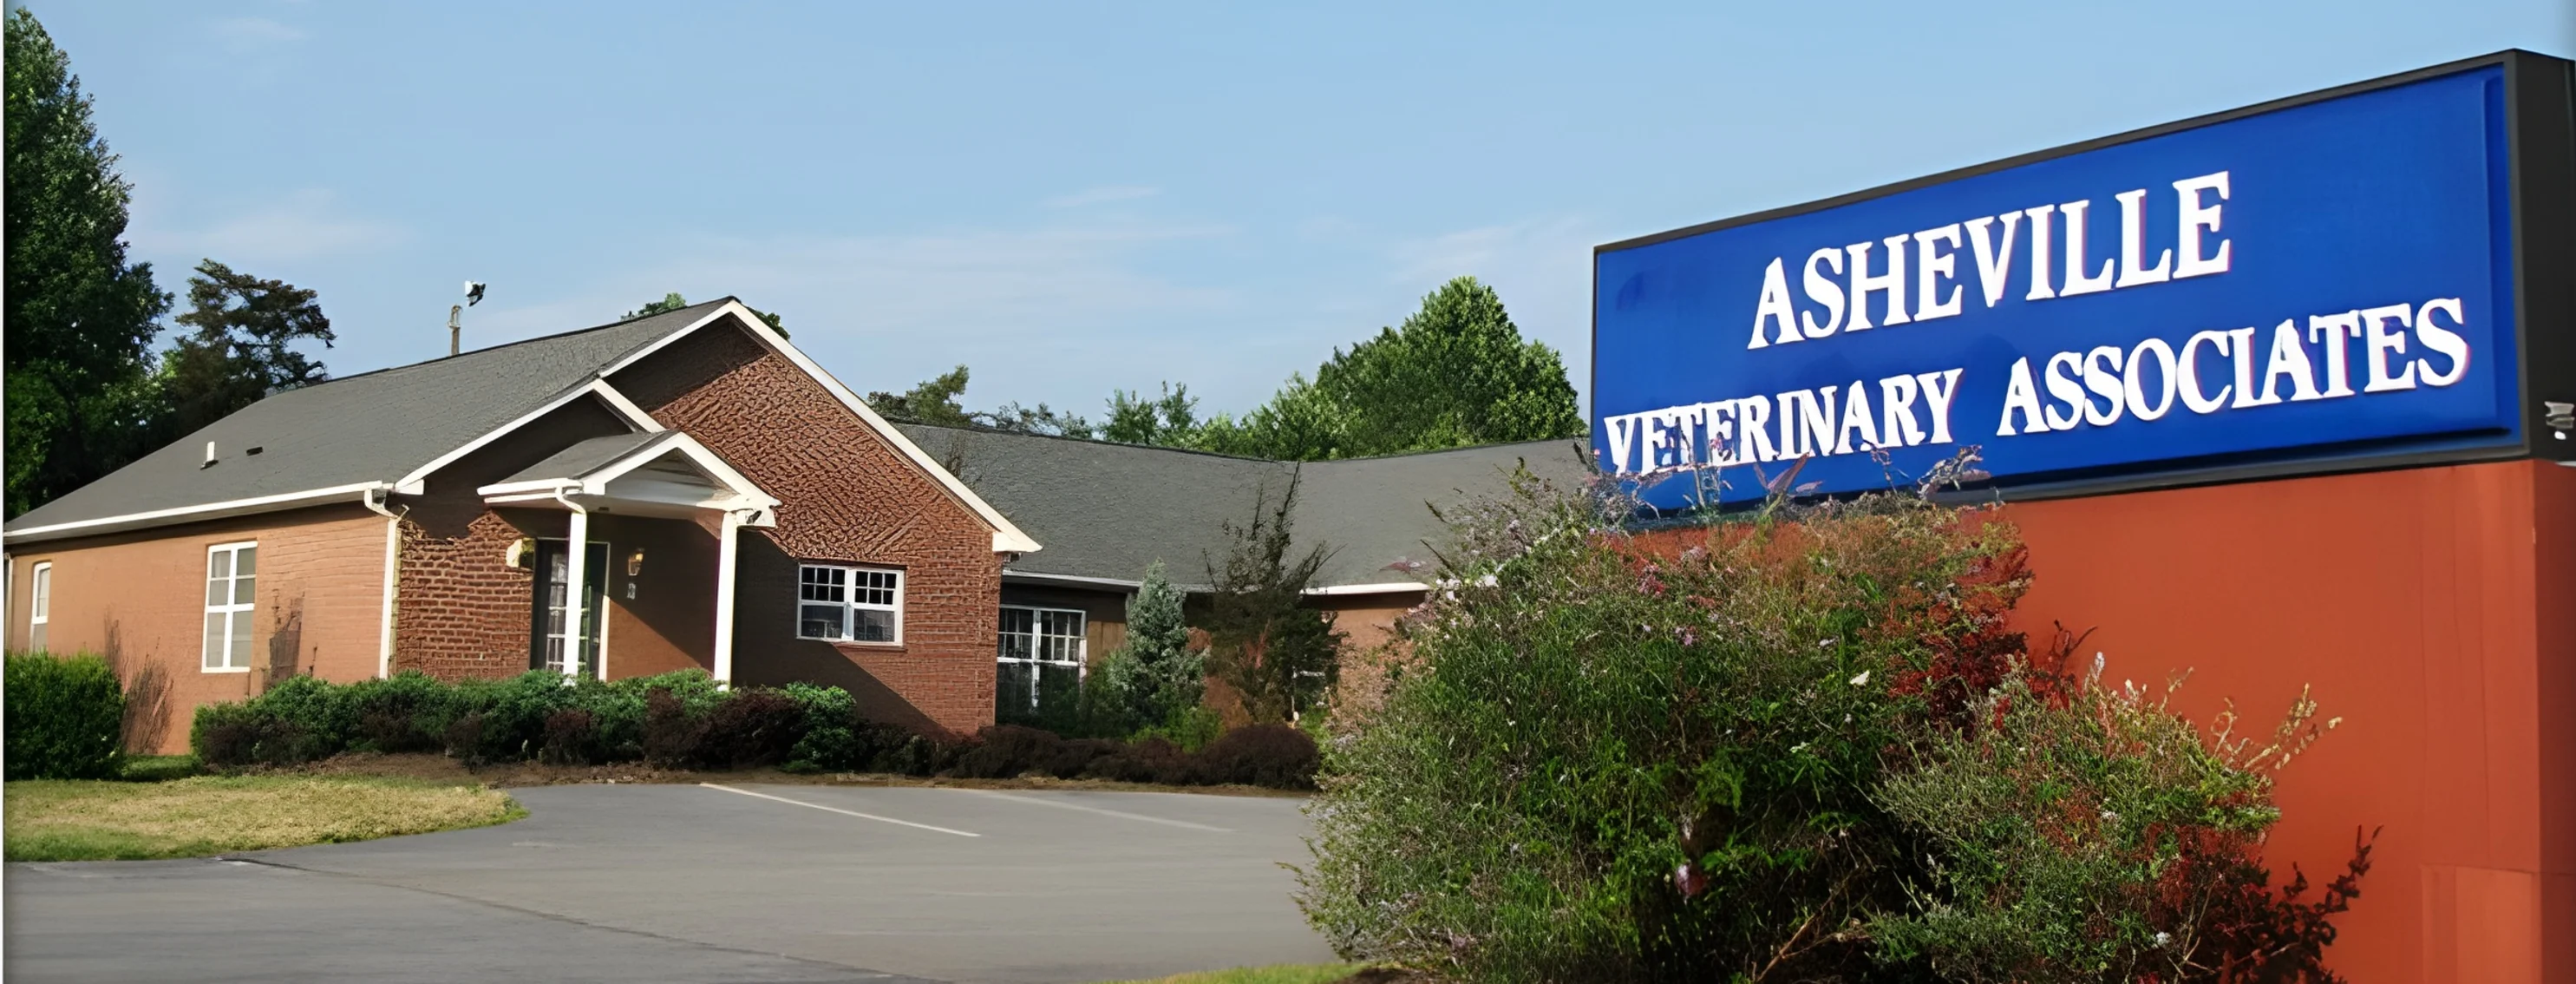 Asheville Veterinary Associates west office